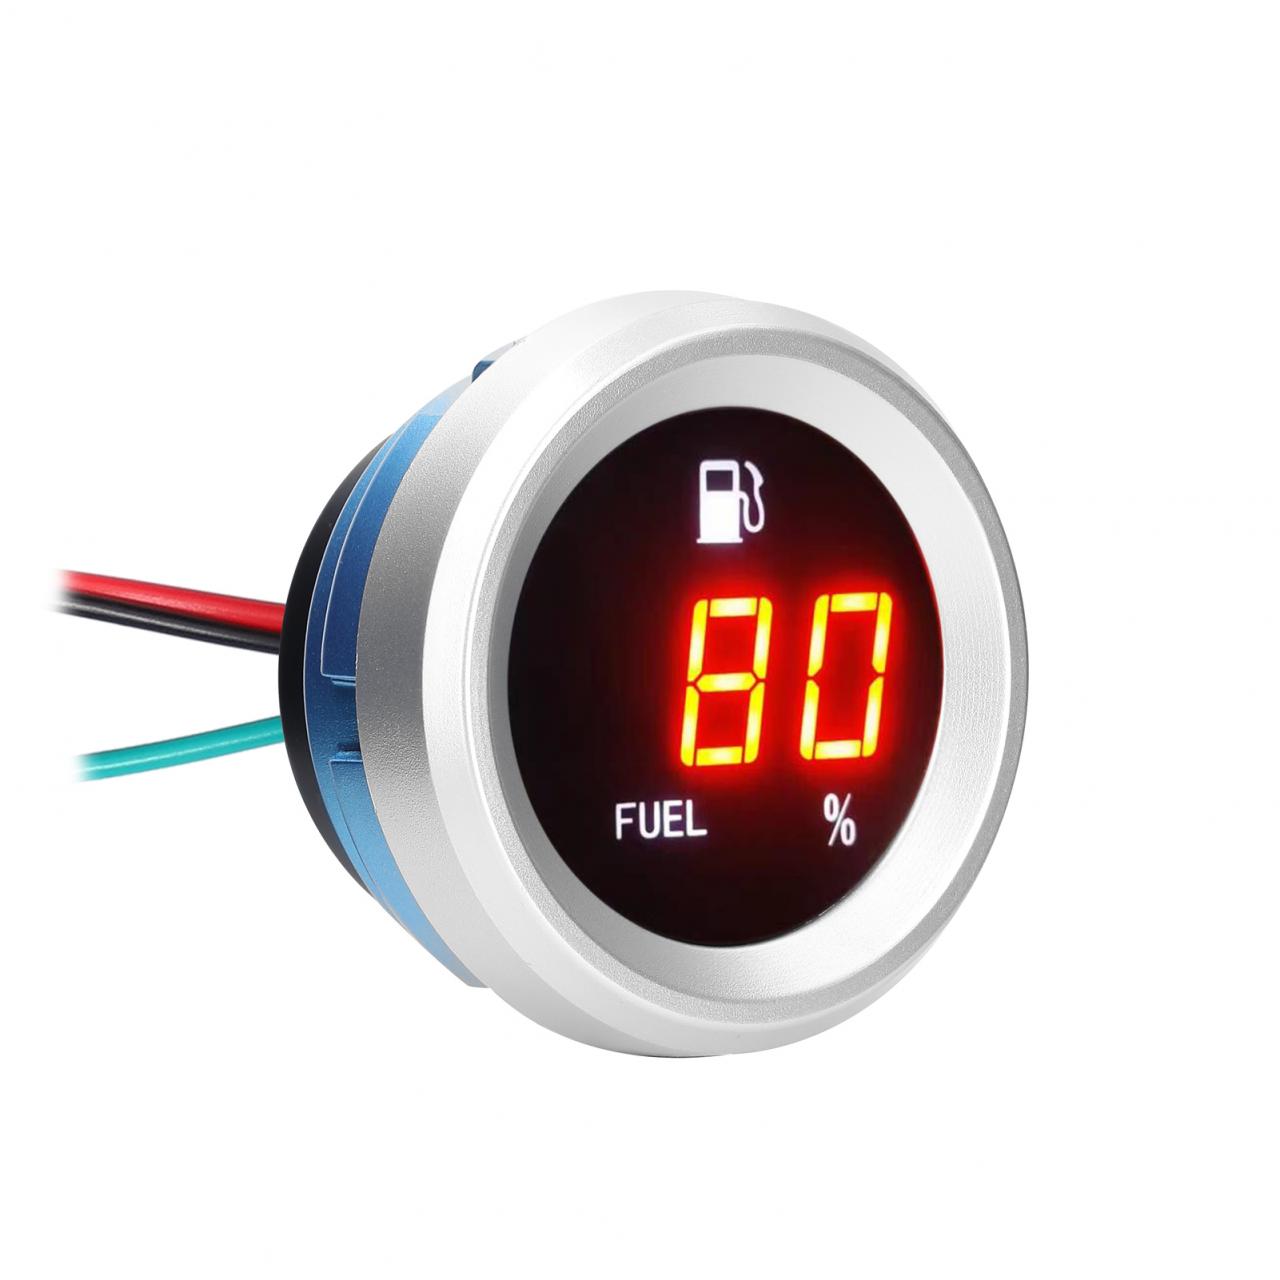 Digital Fuel Level Gauge With Flashing Alarm Car Fuel Level Meter 9-35v Fuel Level Tester For Auto Motorcycle